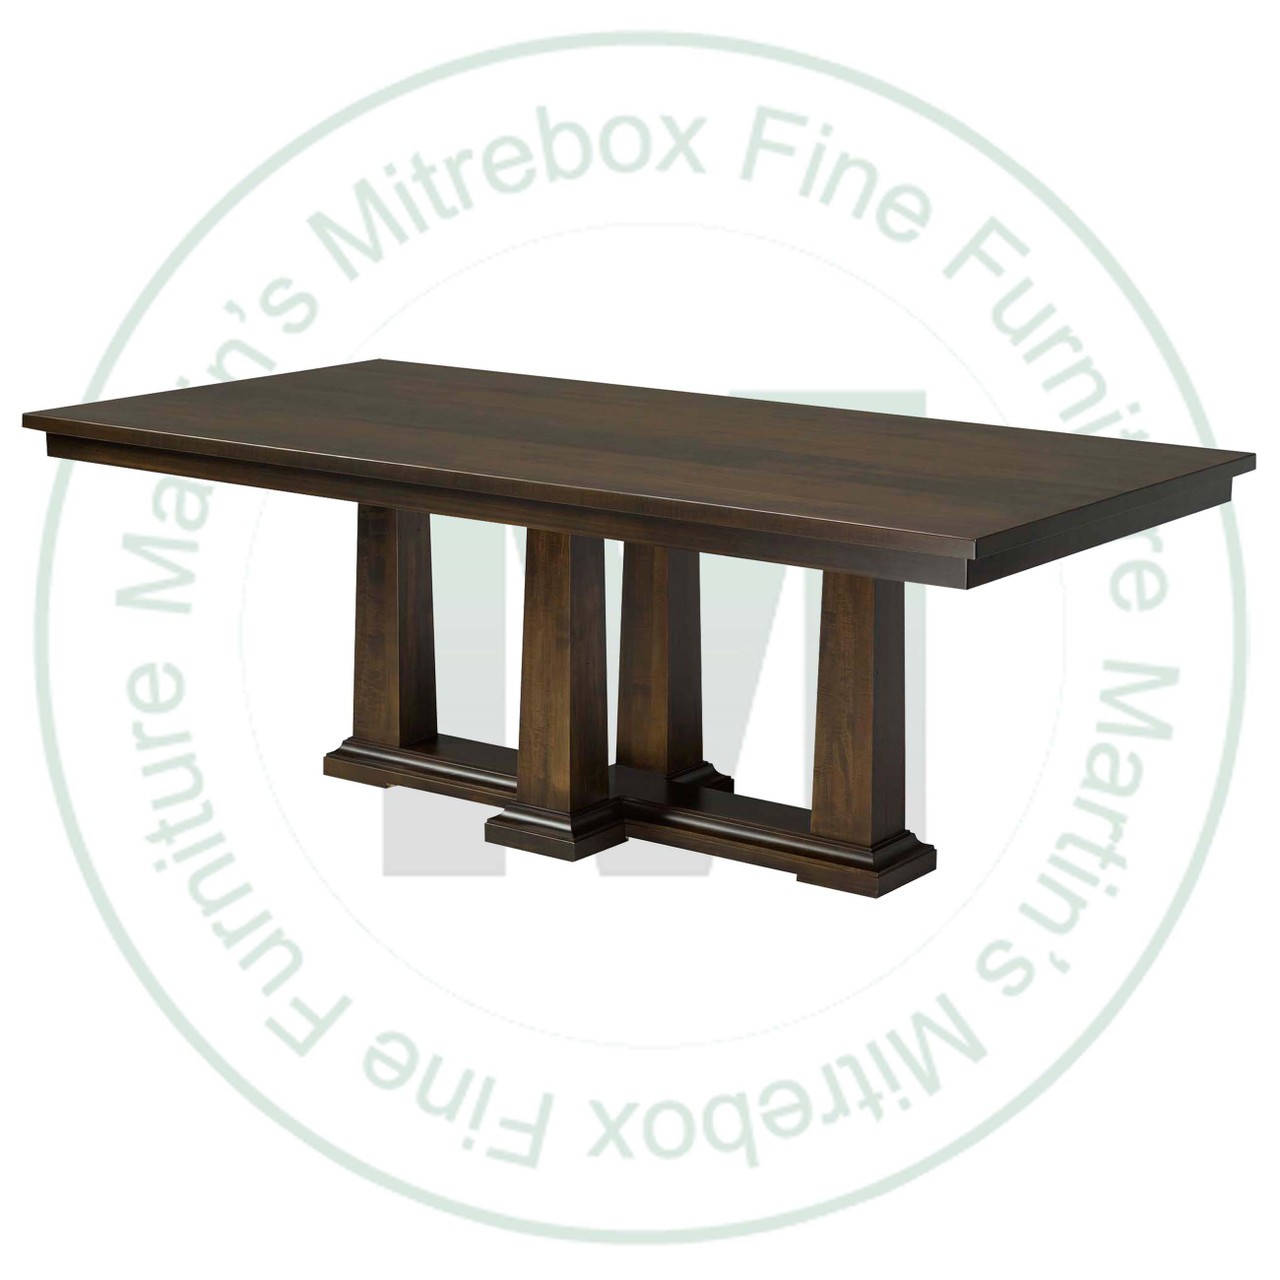 Oak Parthenon Double Pedestal Table 42''D x 72''W x 30''H Solid Top Table Has 1.25'' Thick Top